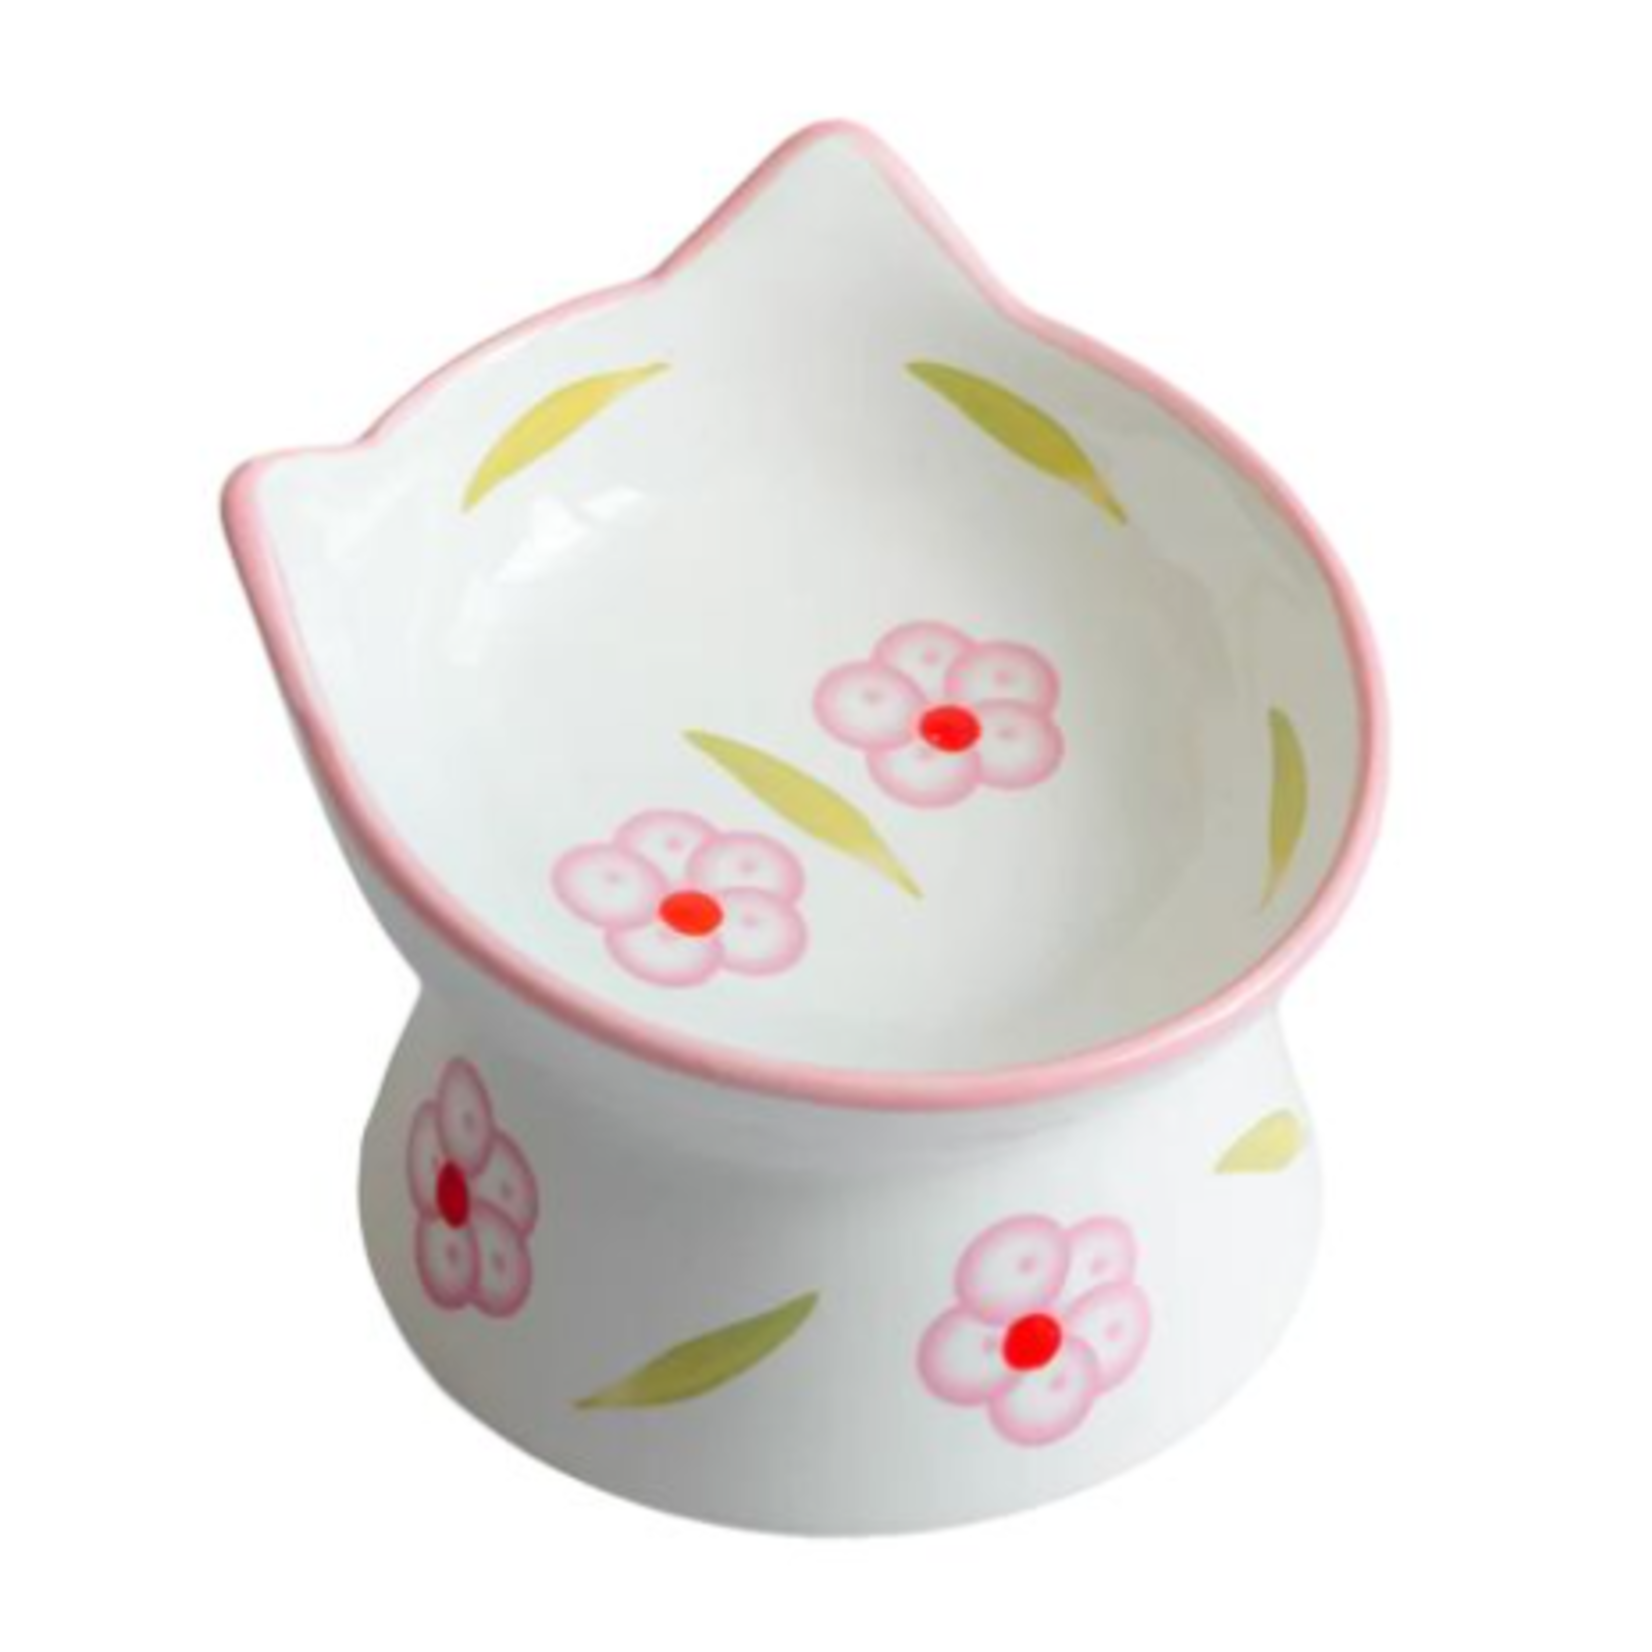 Dexypaws Ceramic Raised Cat Bowl - White & Black Flower Print - 7oz